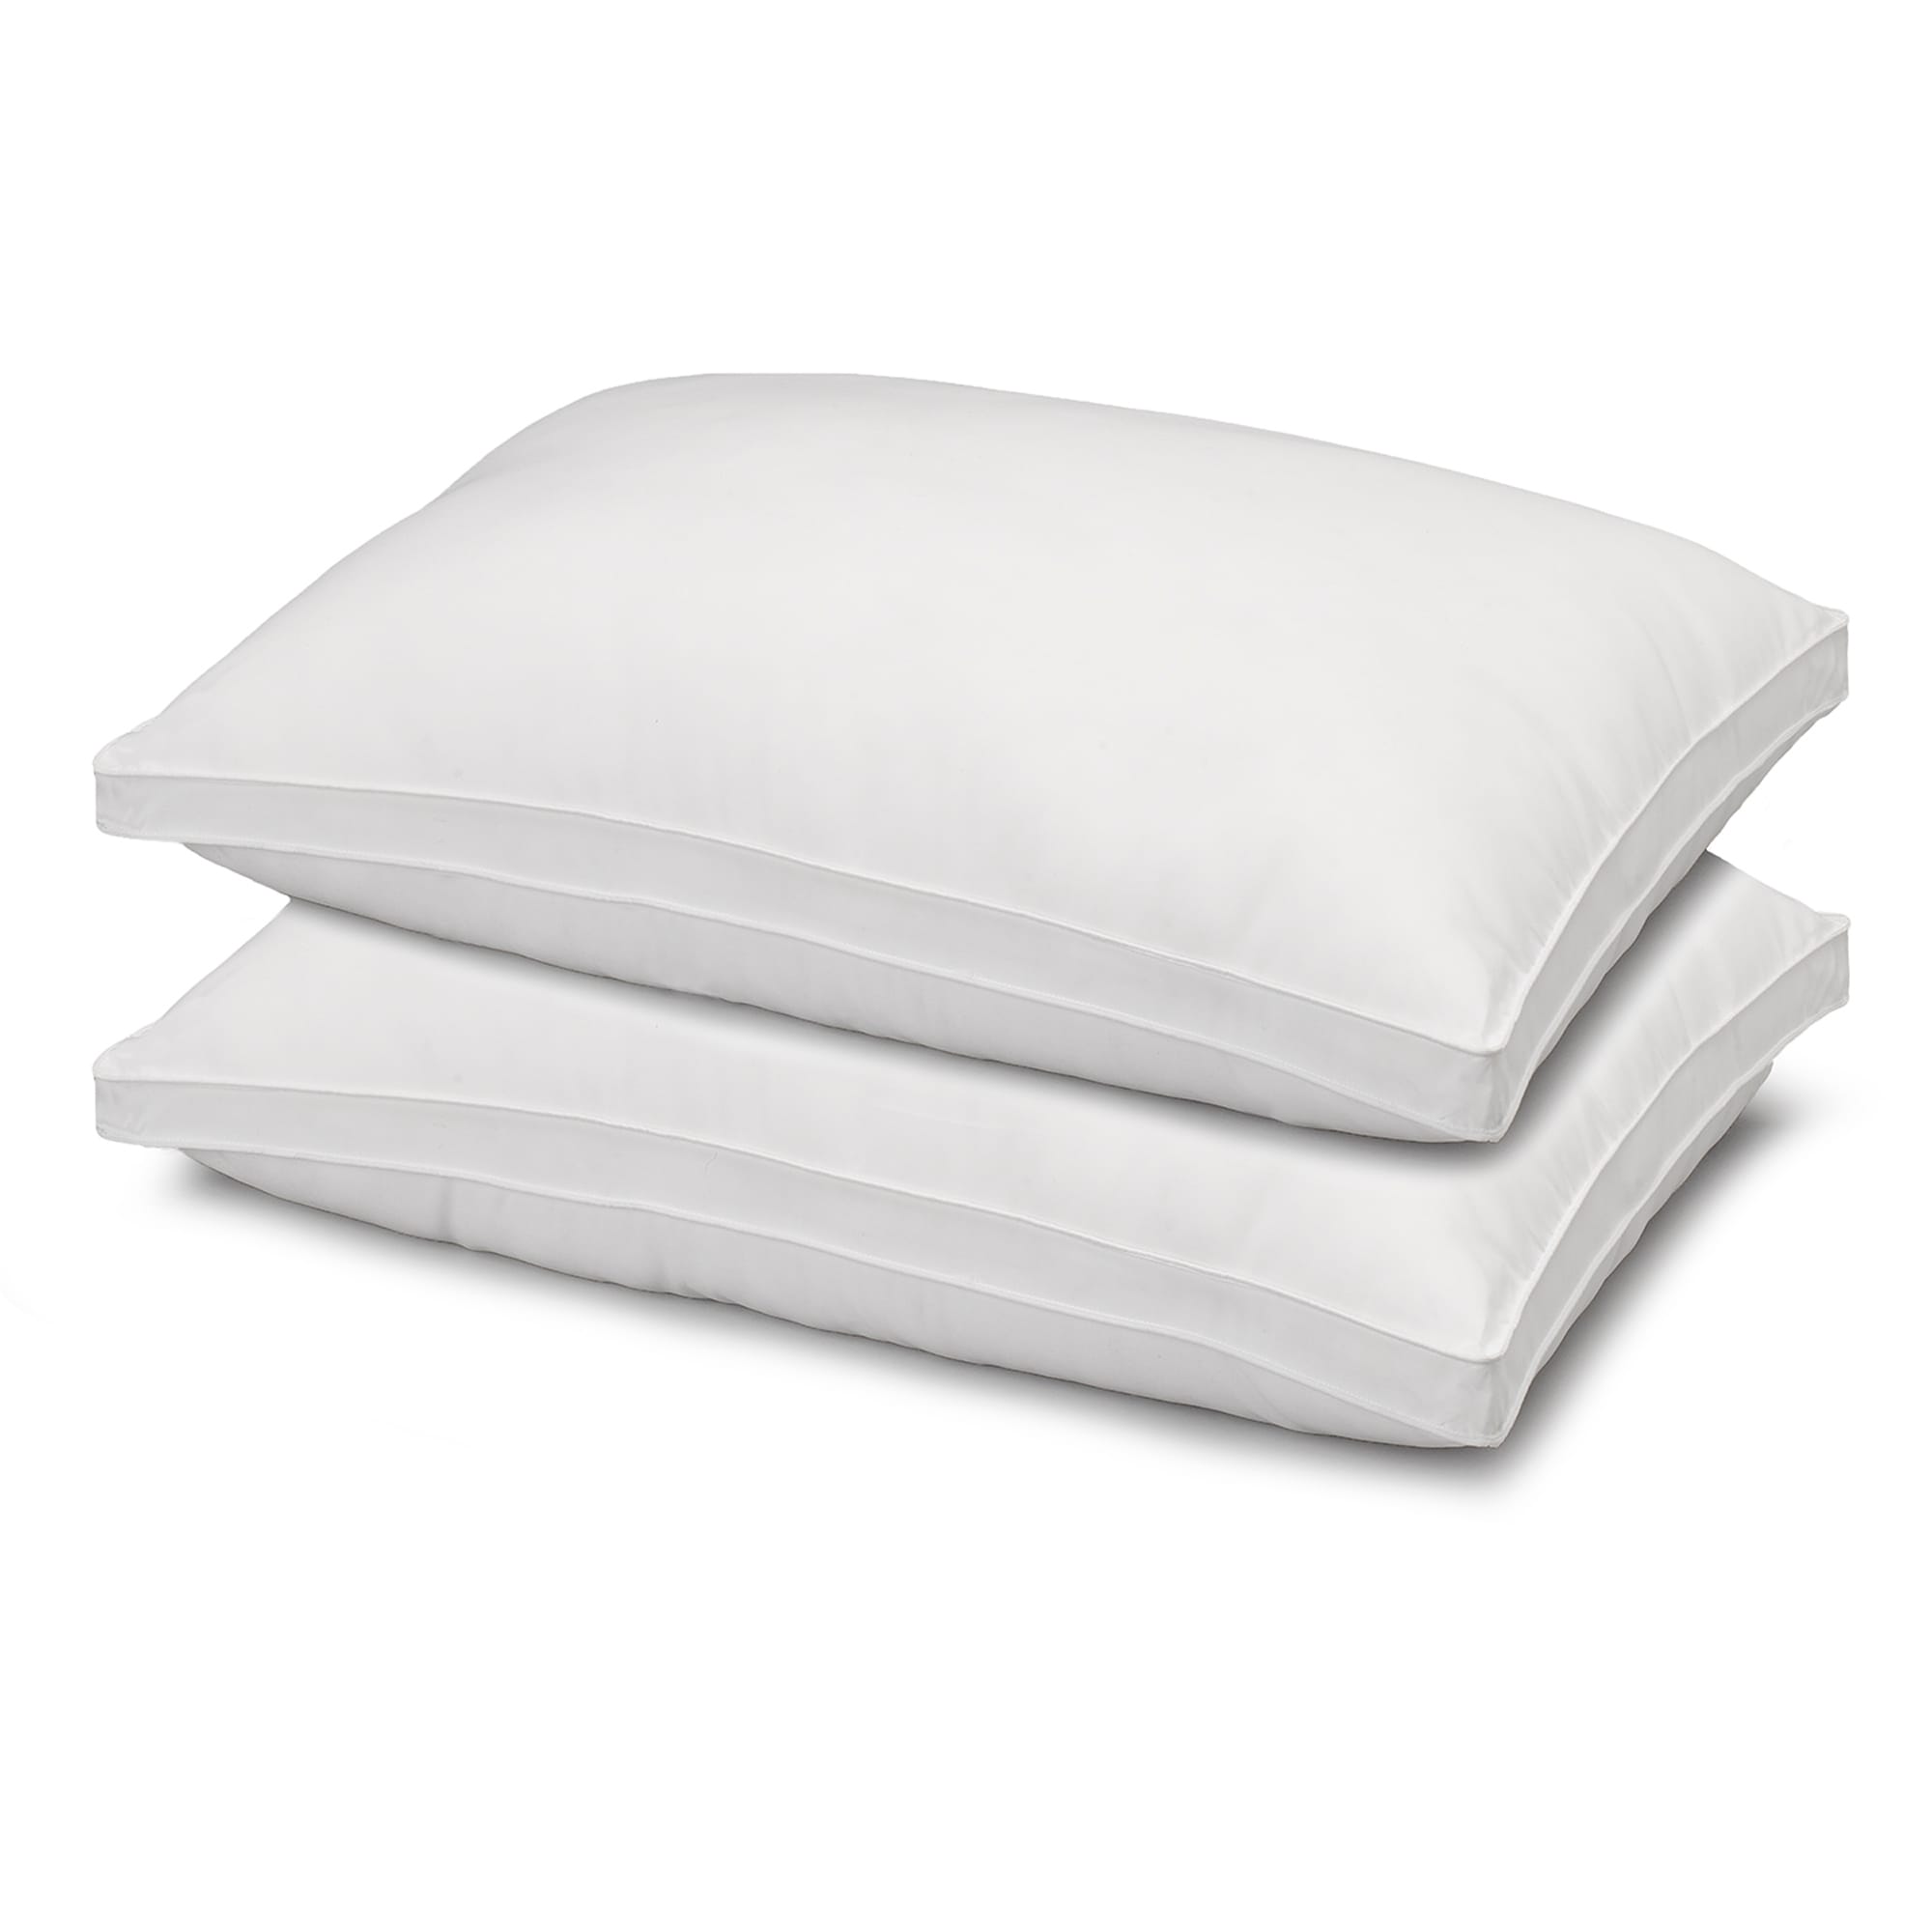 Overstuffed Luxury Plush Med/Firm Gel Filled Side/Back Sleeper Pillow. Set of 2